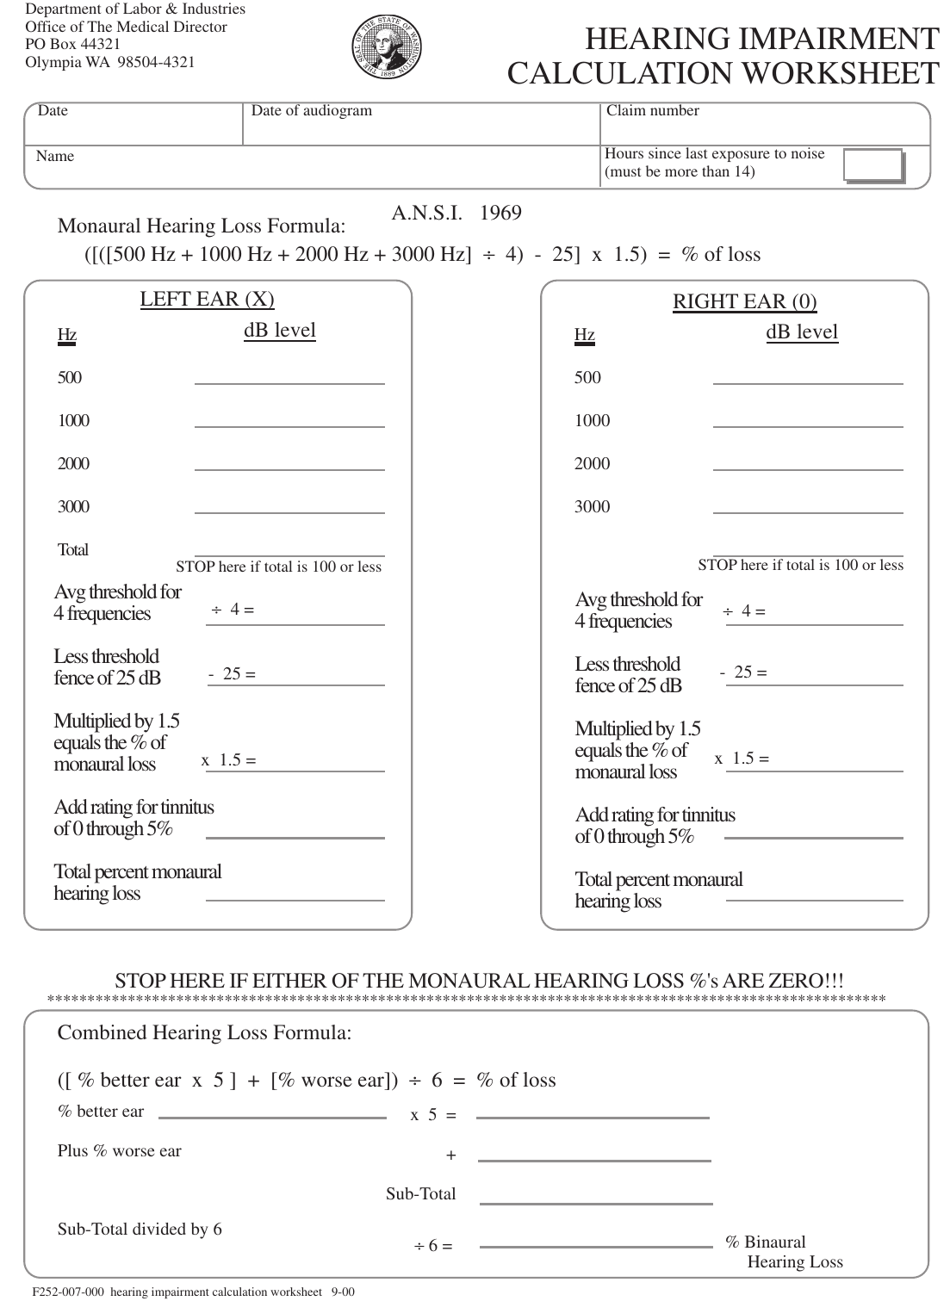 Form F252-007-000 Hearing Impairment Calculation Worksheet - Washington, Page 1